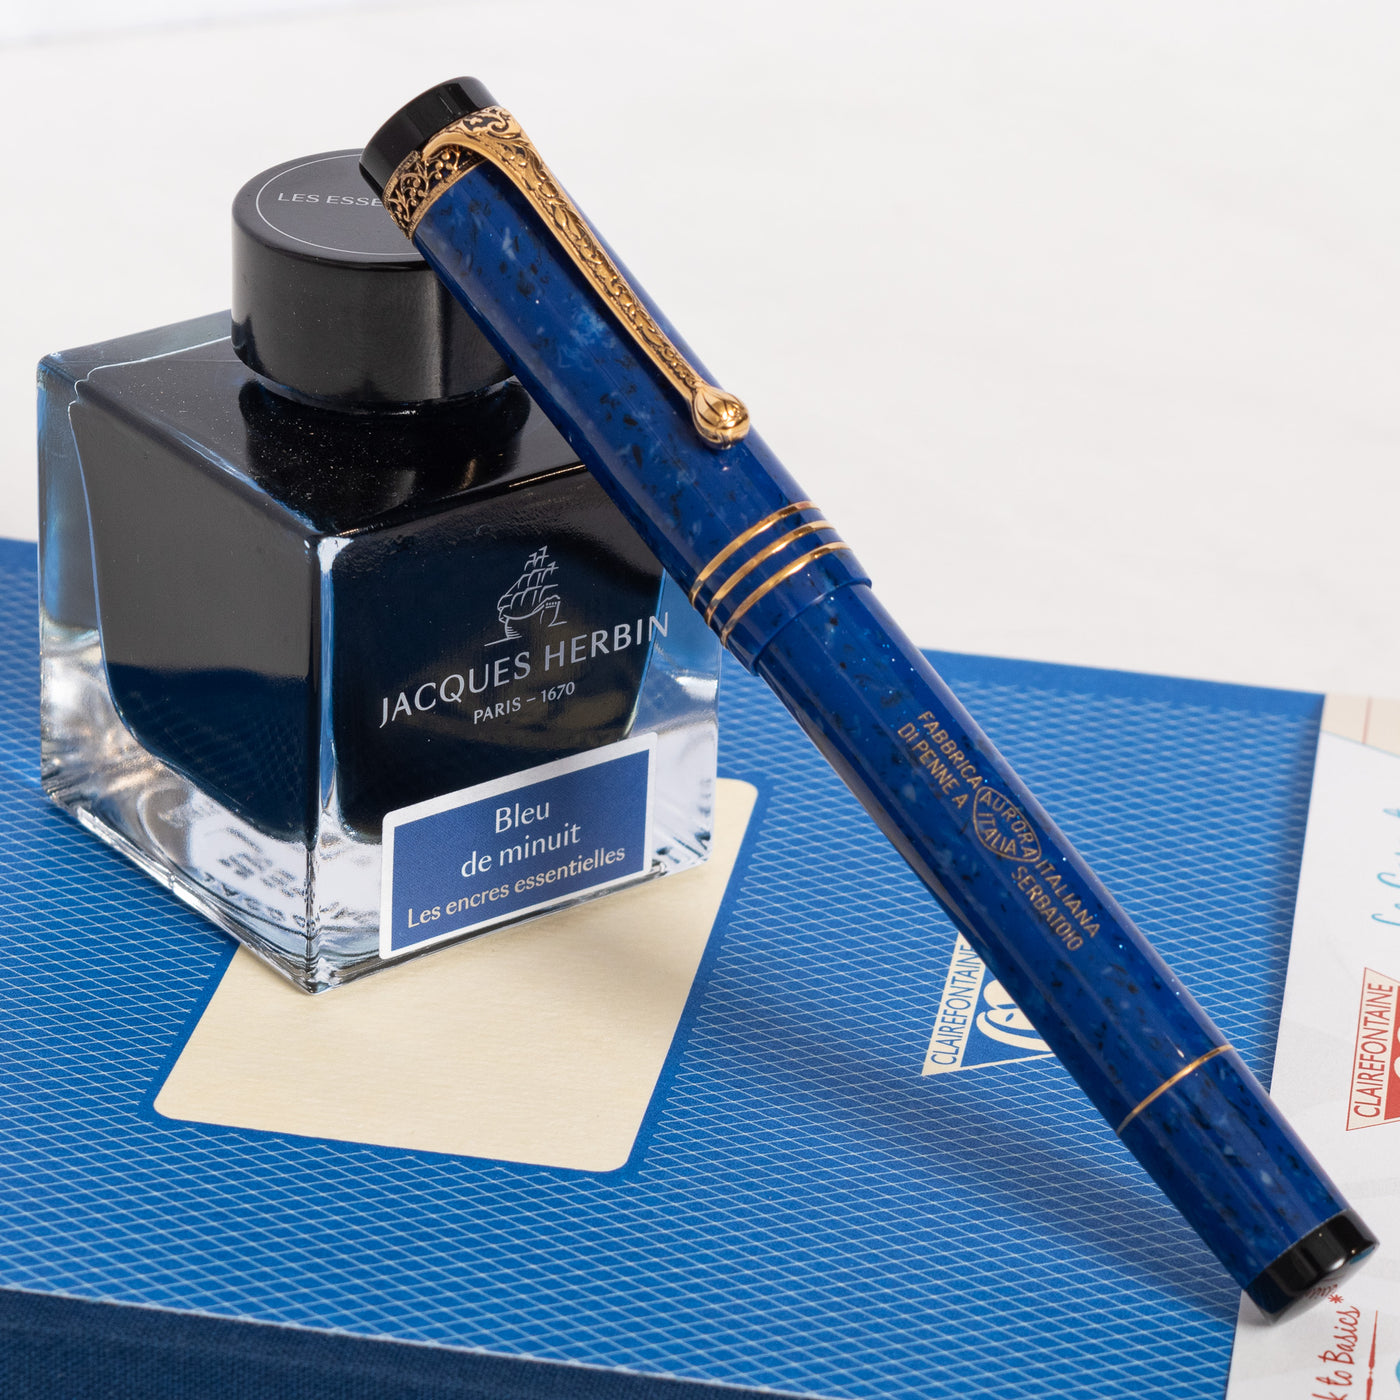 Aurora Internazionale Blue Limited Edition Fountain Pen capped